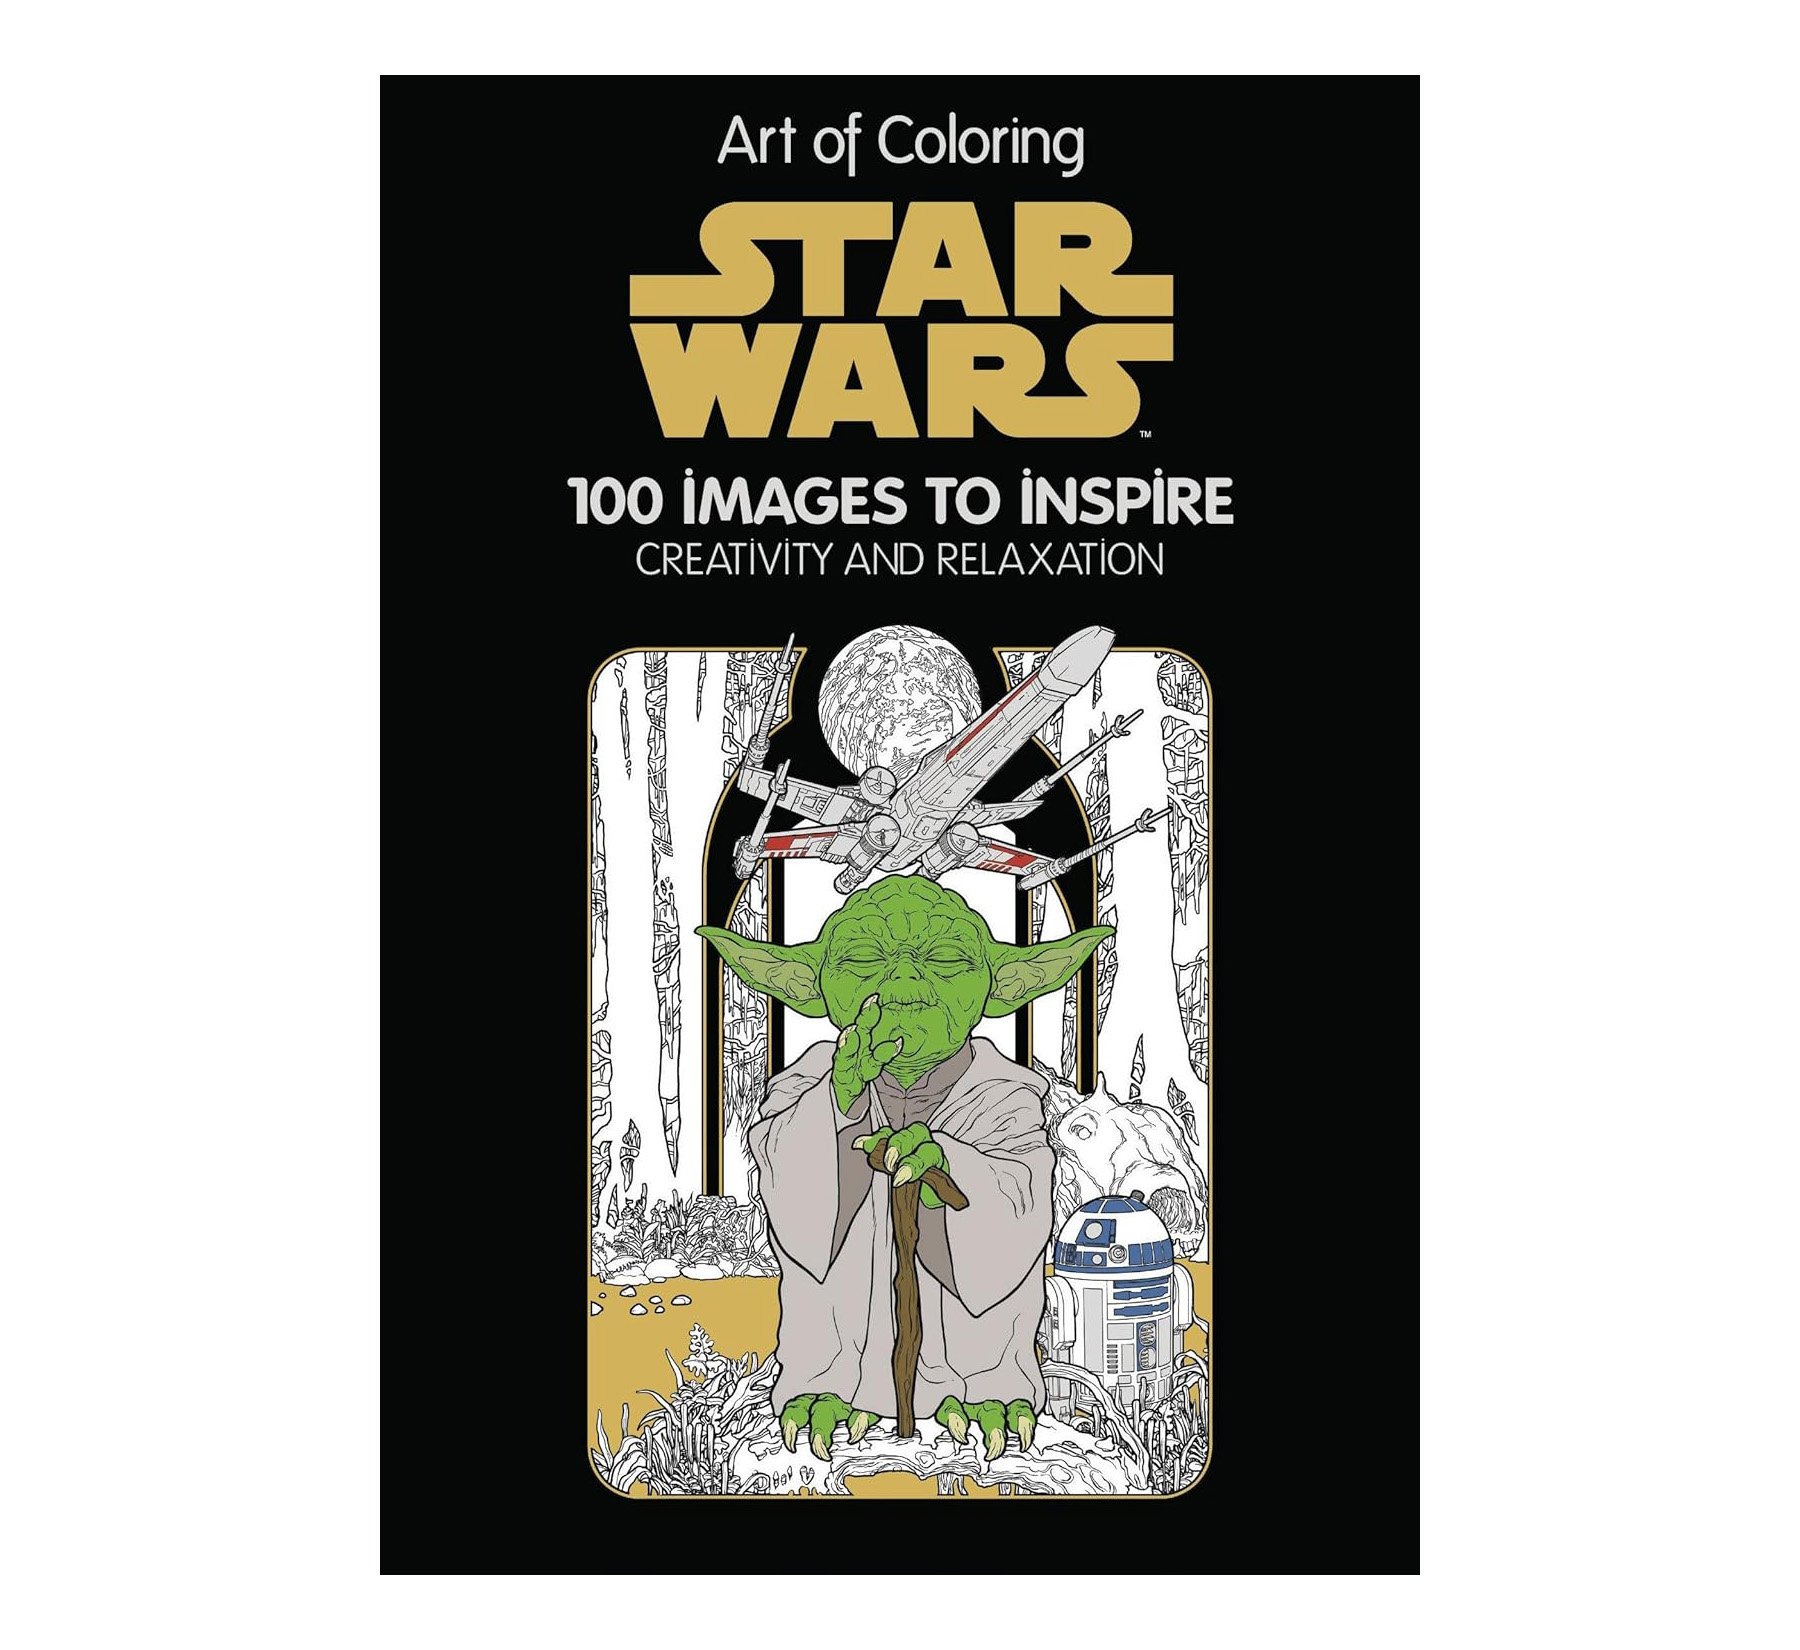 Art of Coloring Star Wars Coloring Book